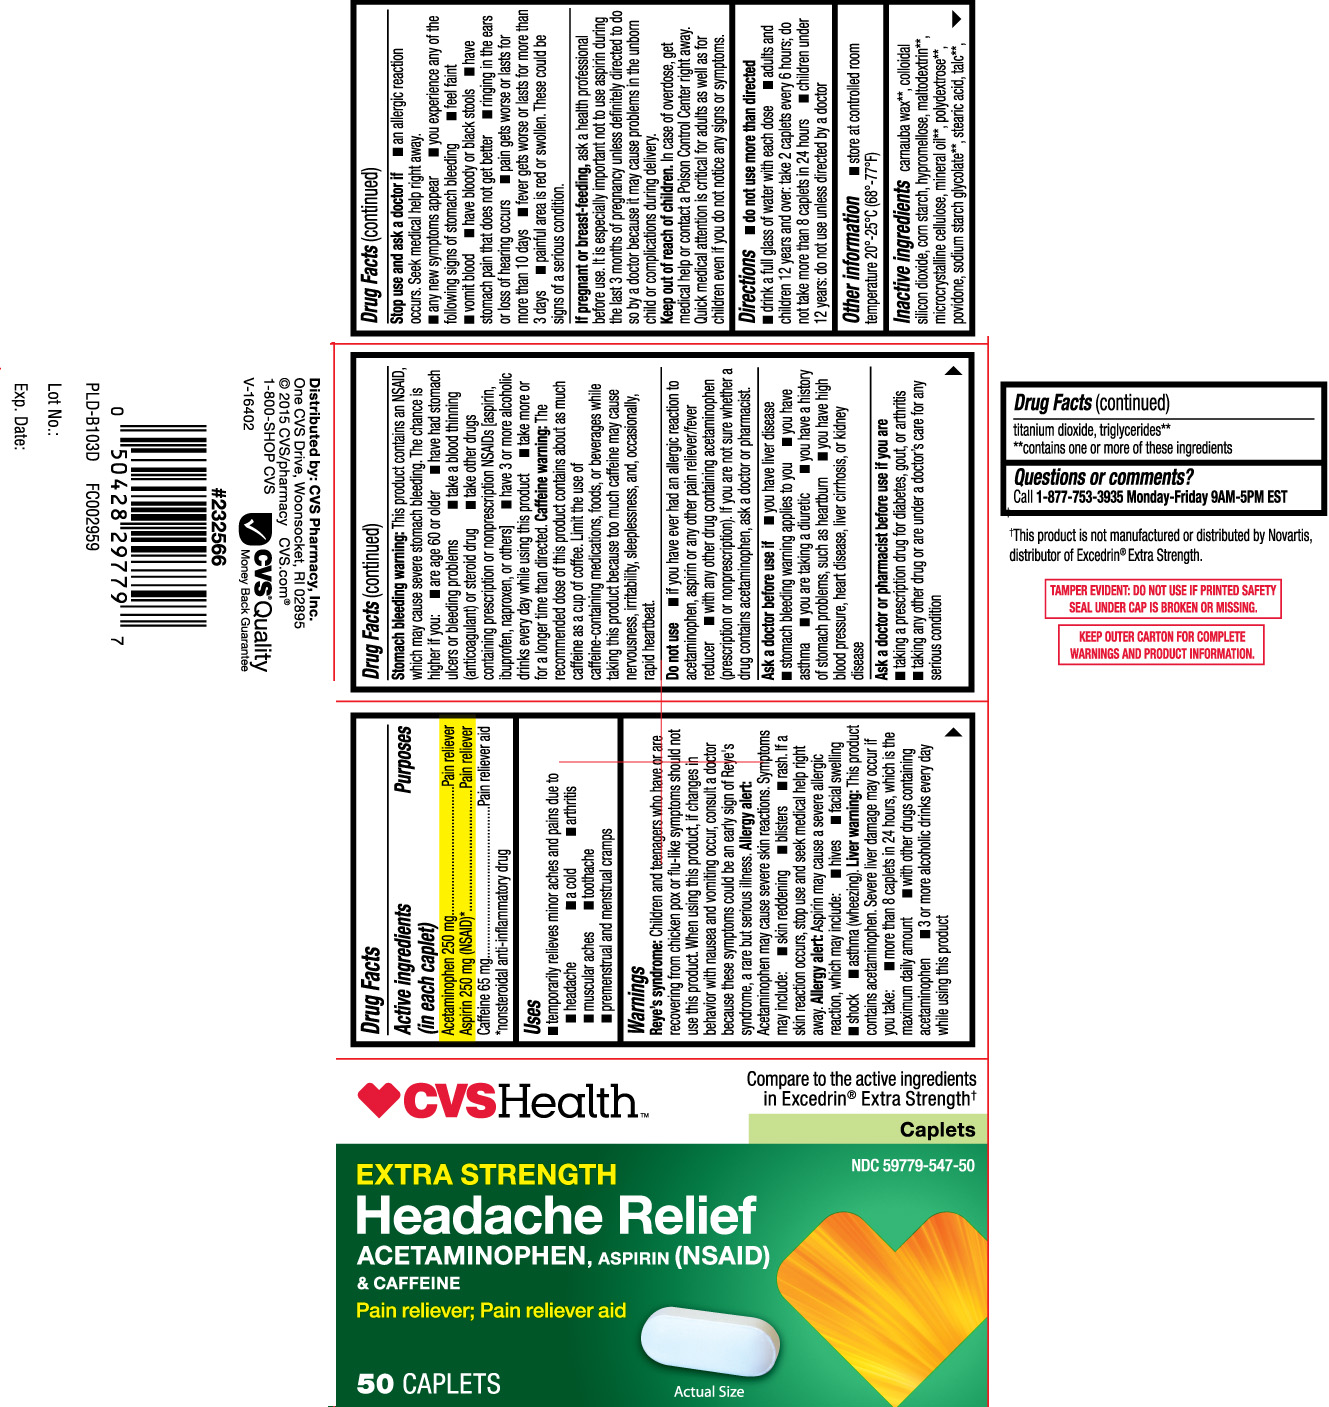 Acetaminophen 250 mg, Aspirin 250 mg (NSAID), Caffeine 65 mg